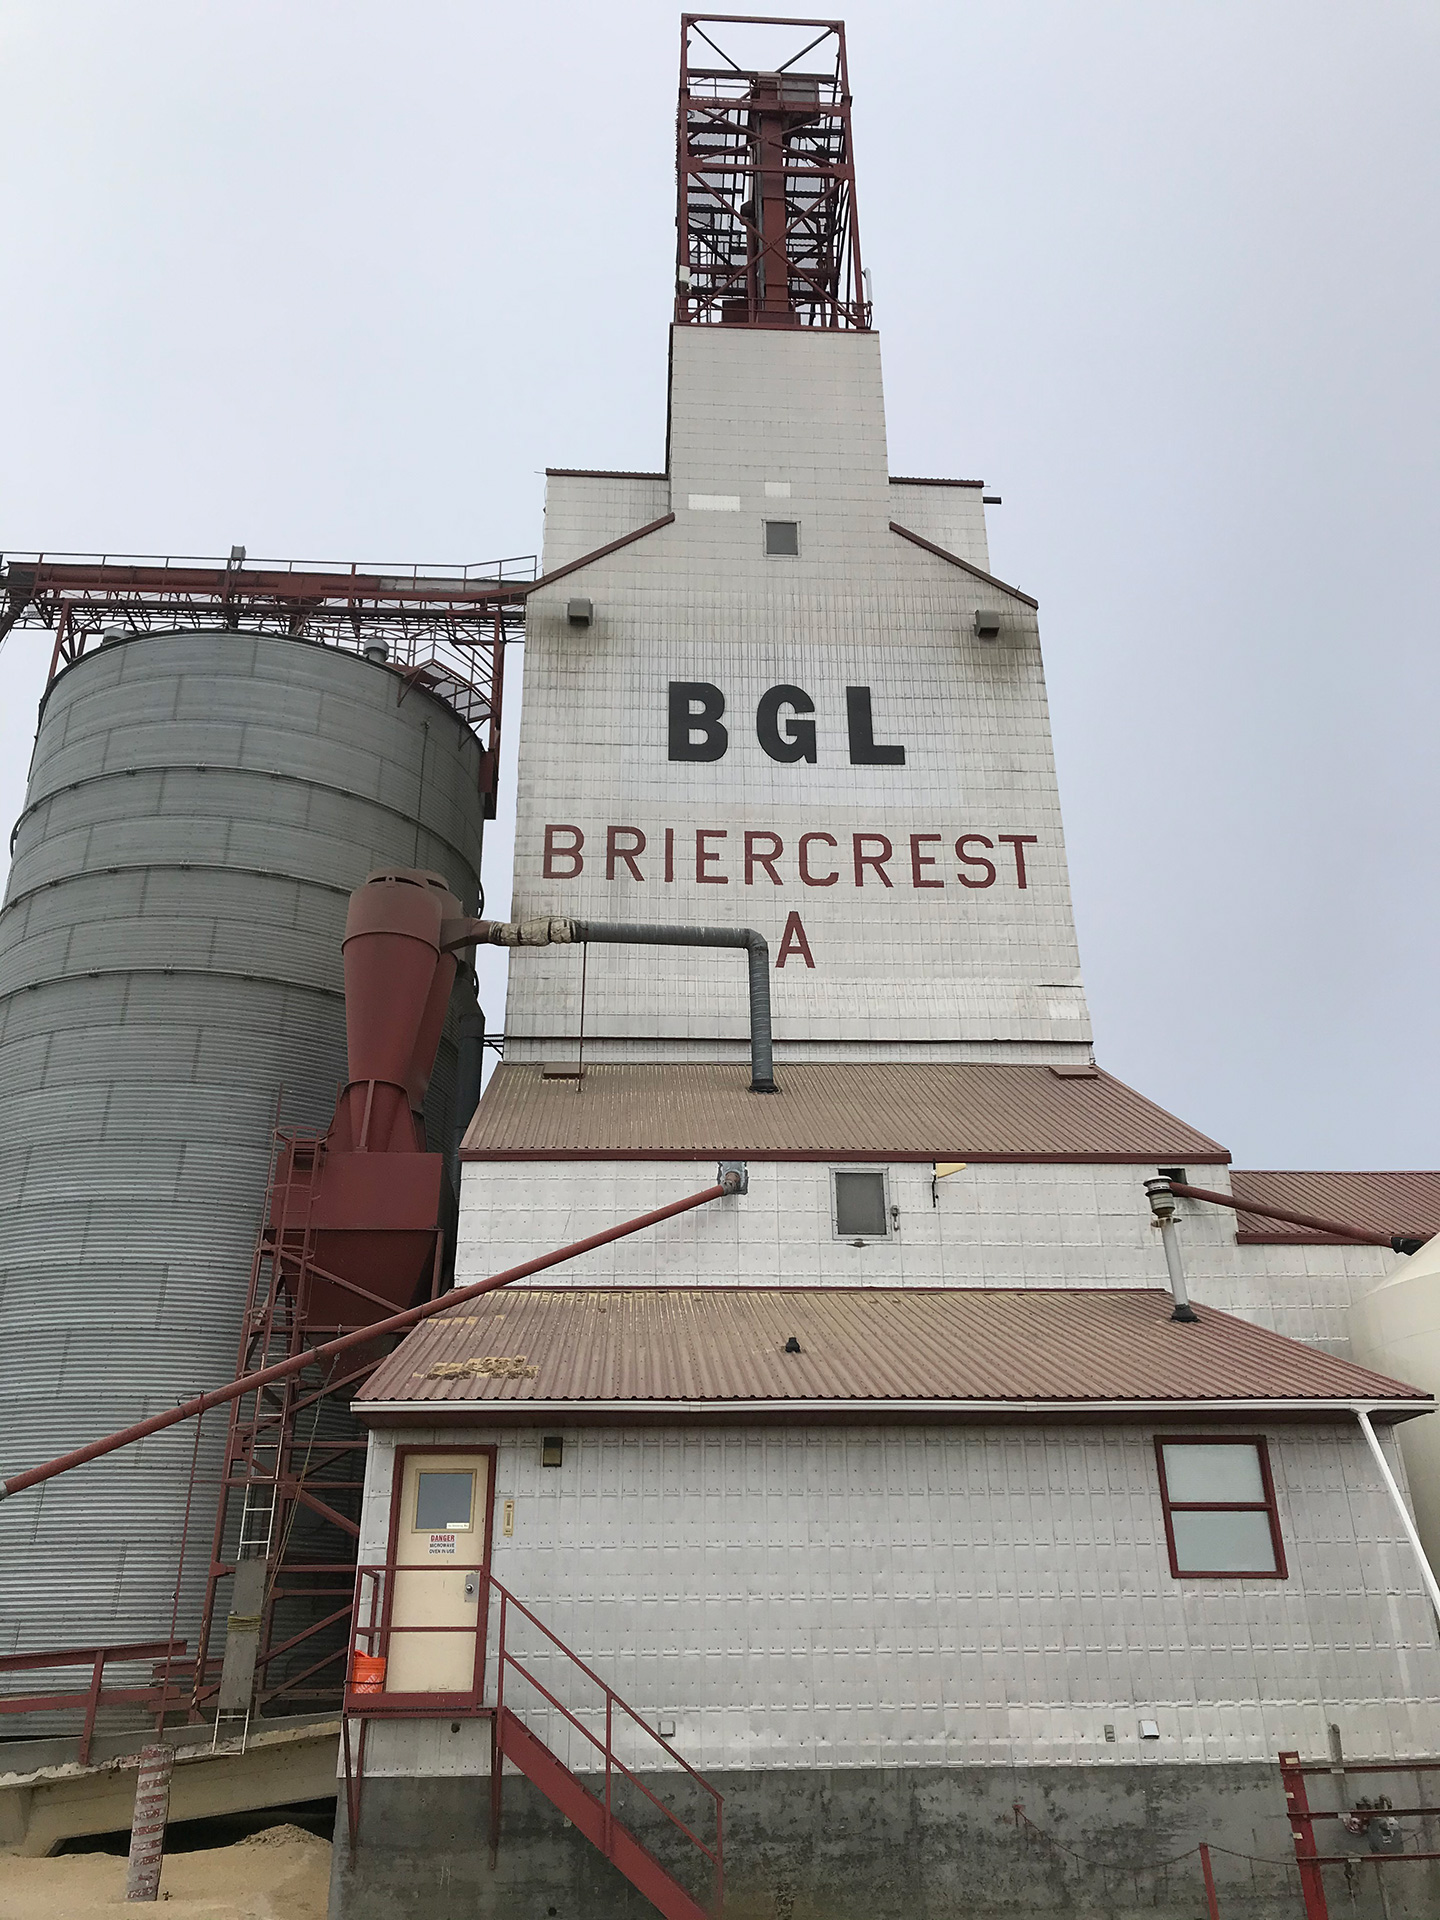  BGL Briercrest Grain Elevator